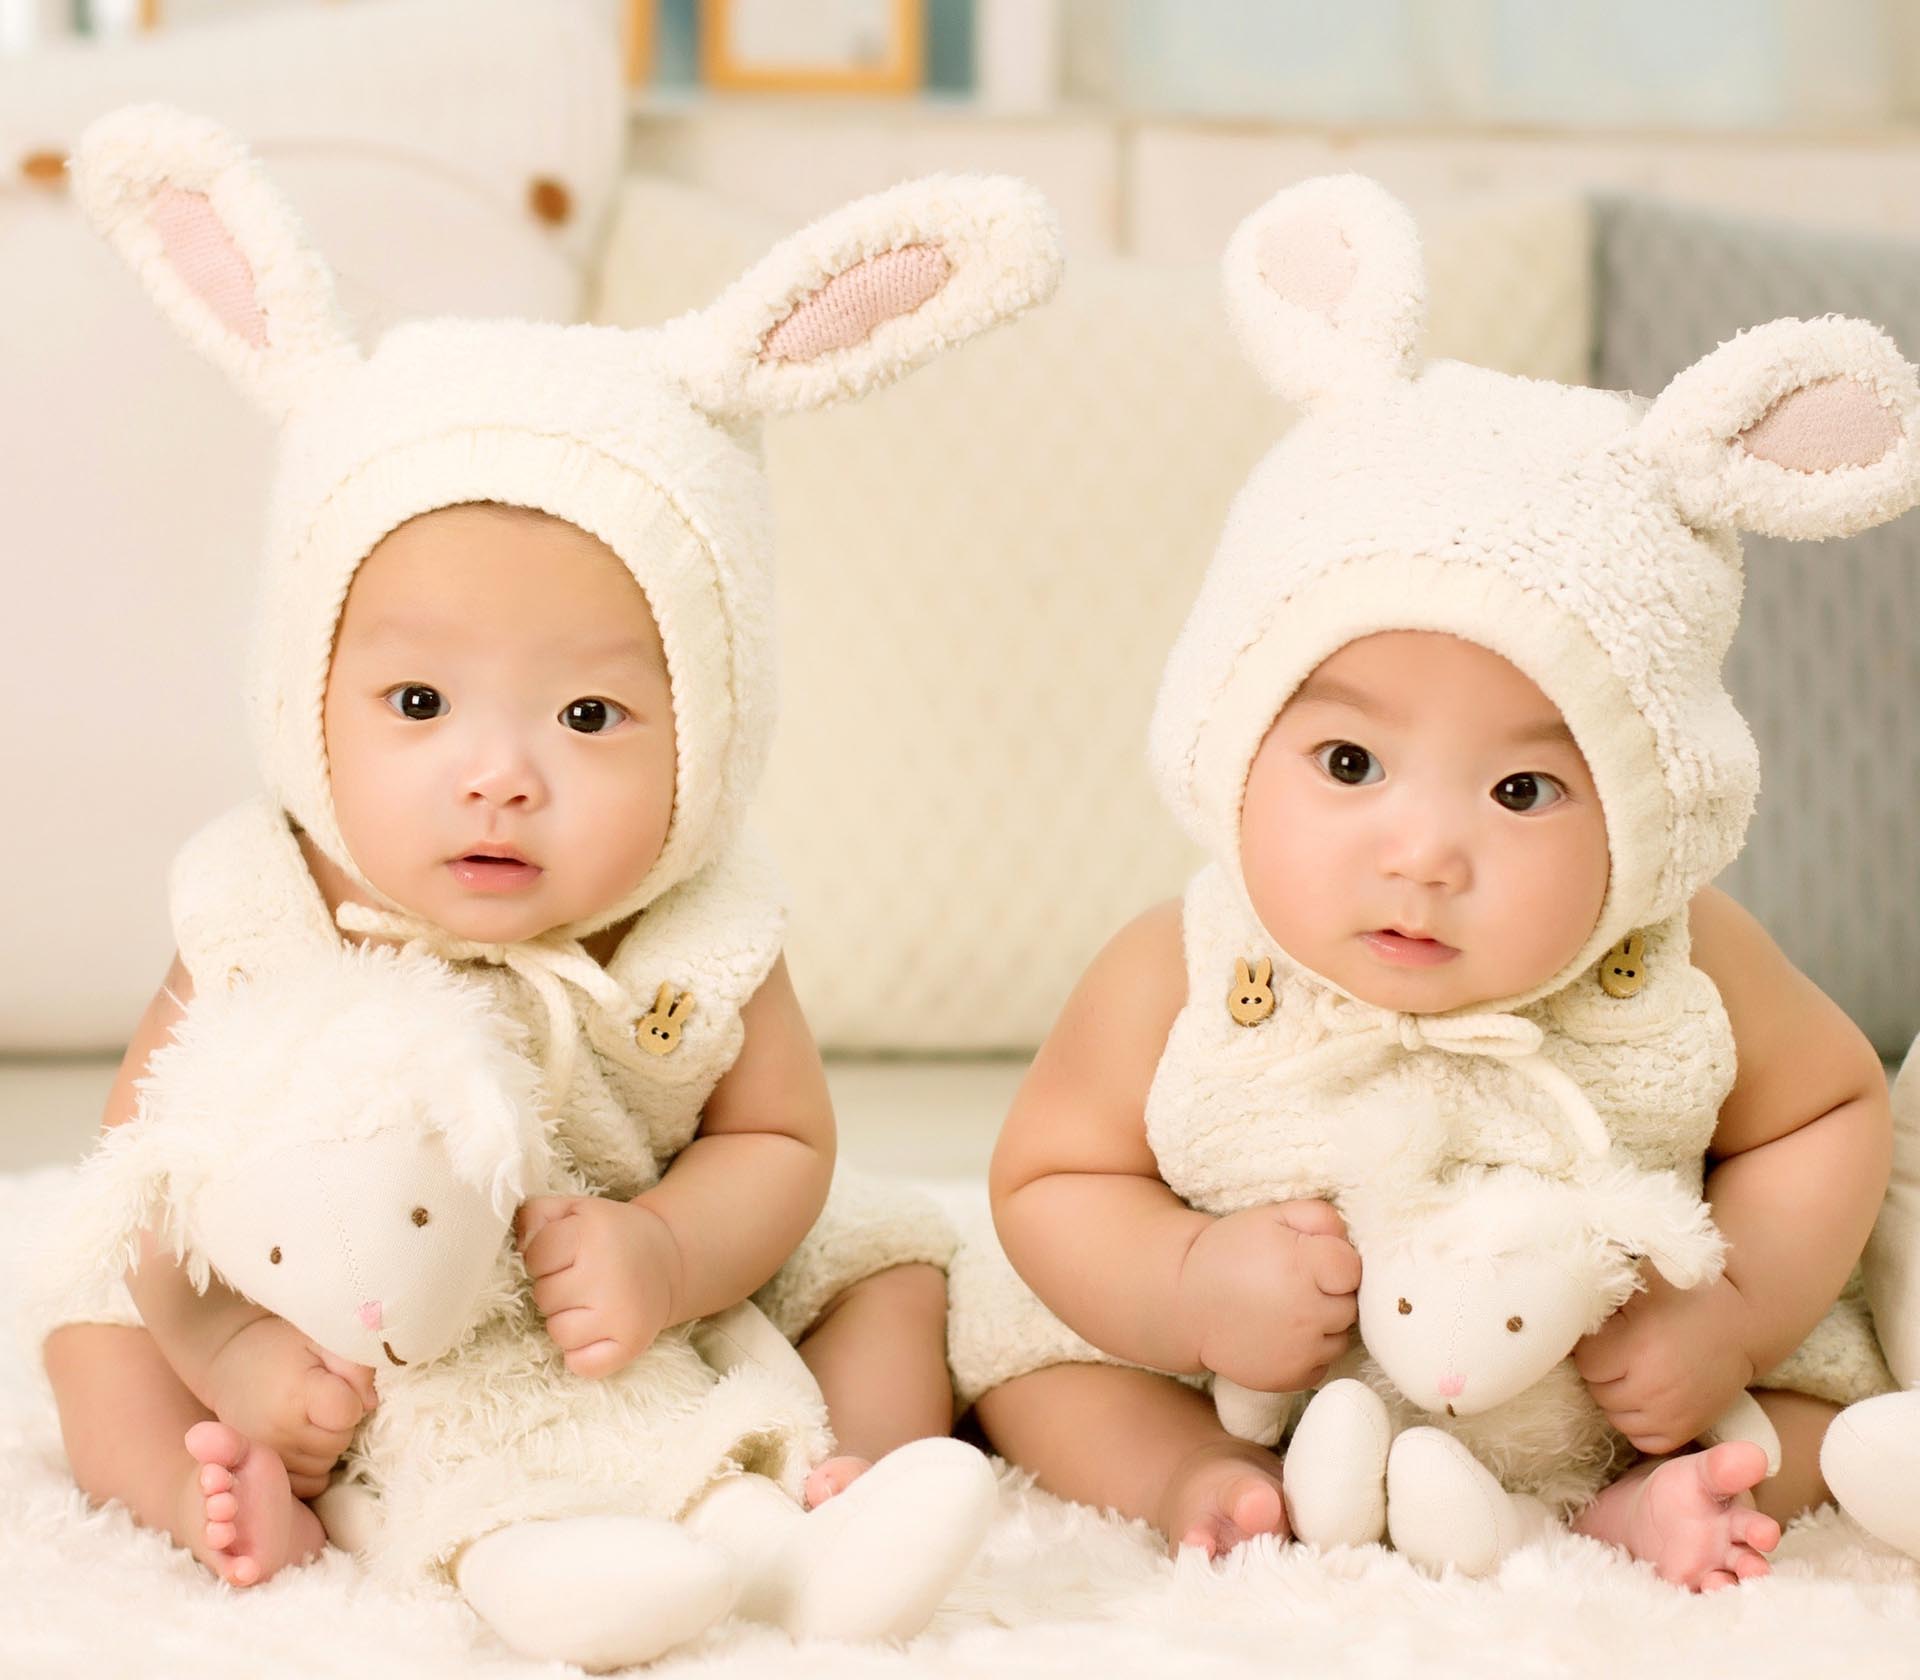 Twins Baby Company Limited 孖寶嬰兒用品有限公司